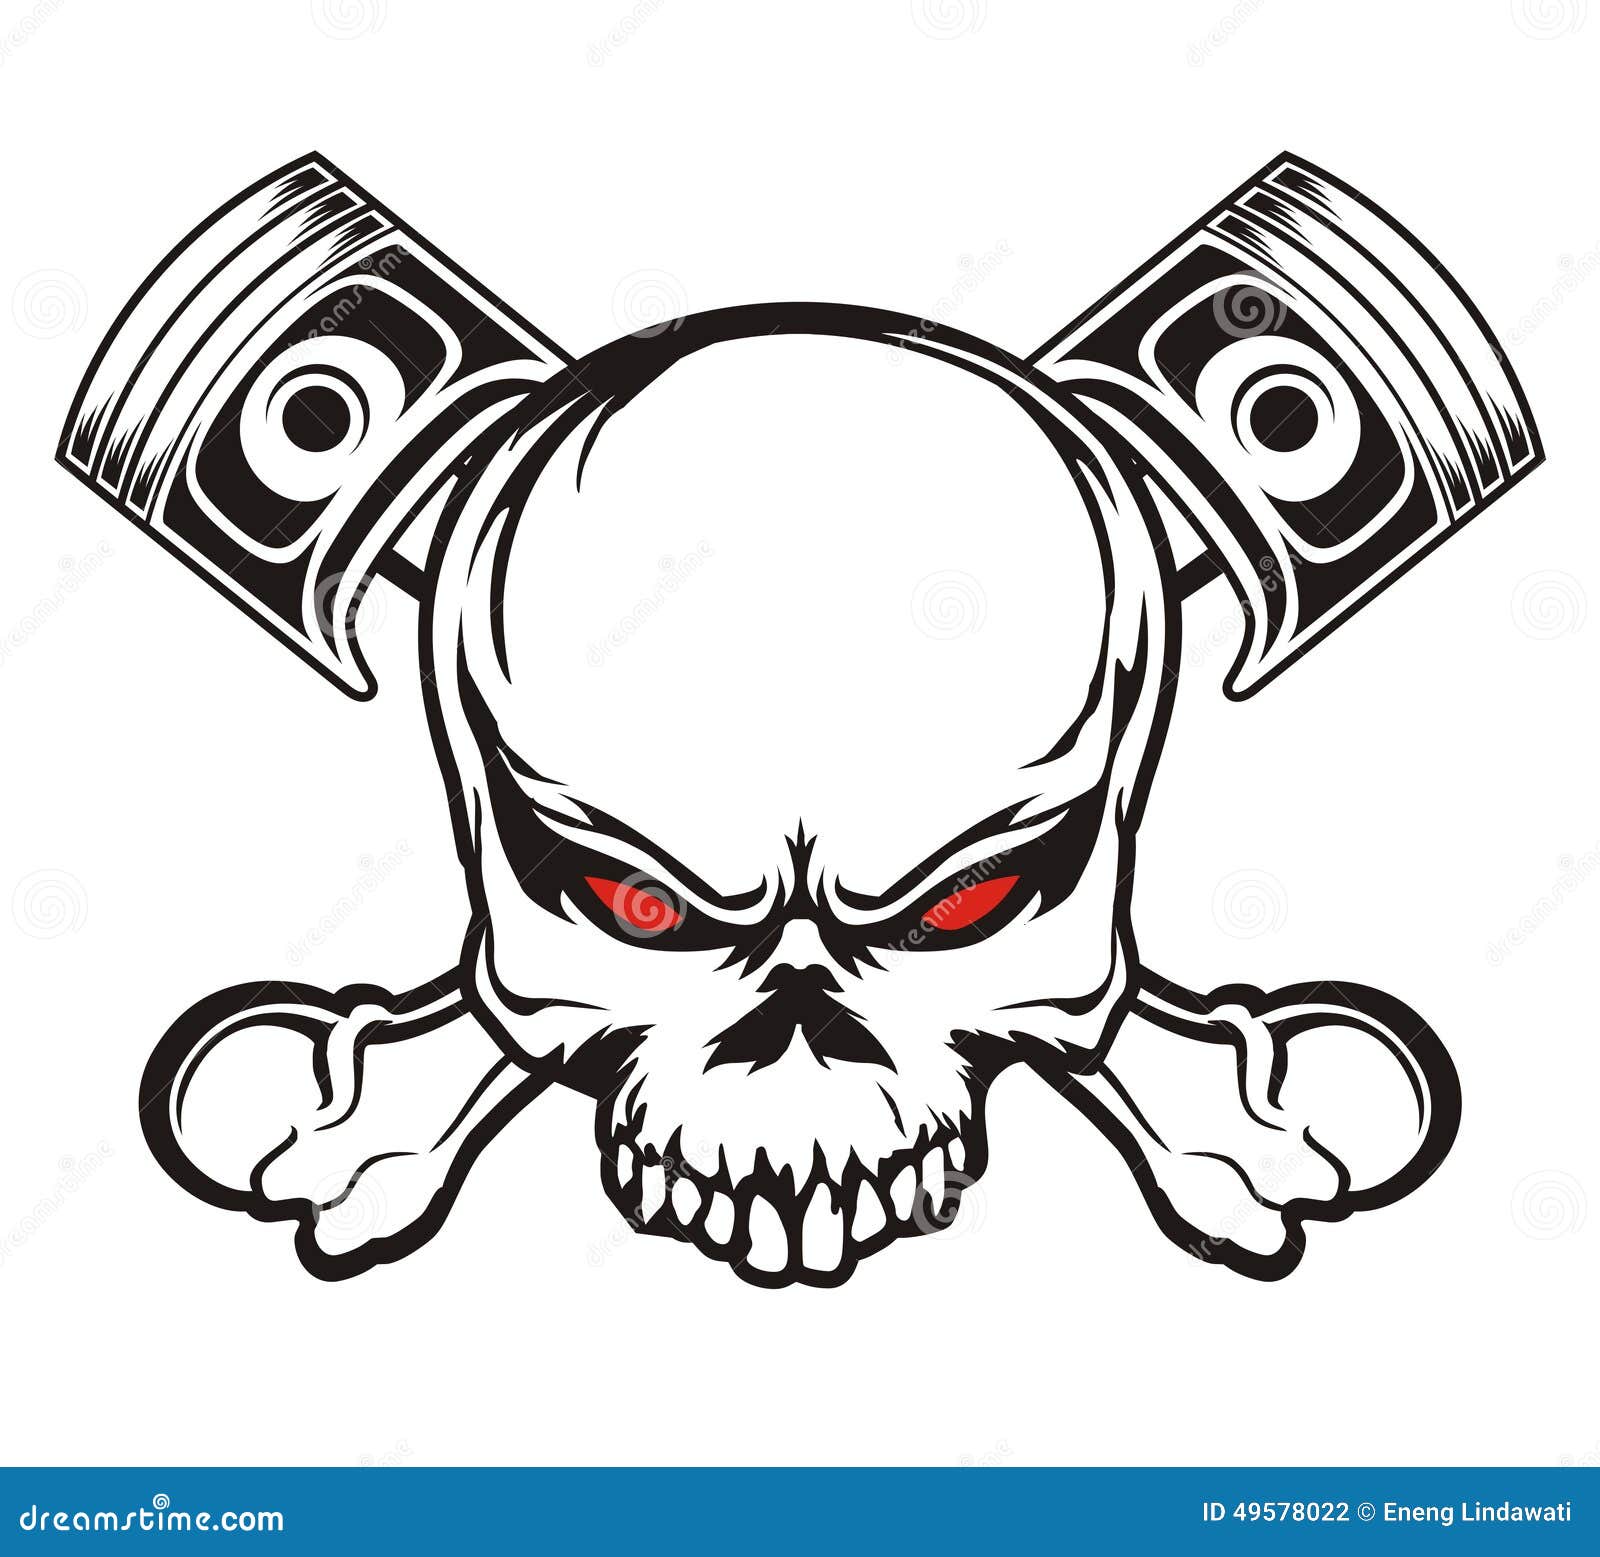 Premium Vector  Skull wearing helmet and head pistons with old school  tattoo style